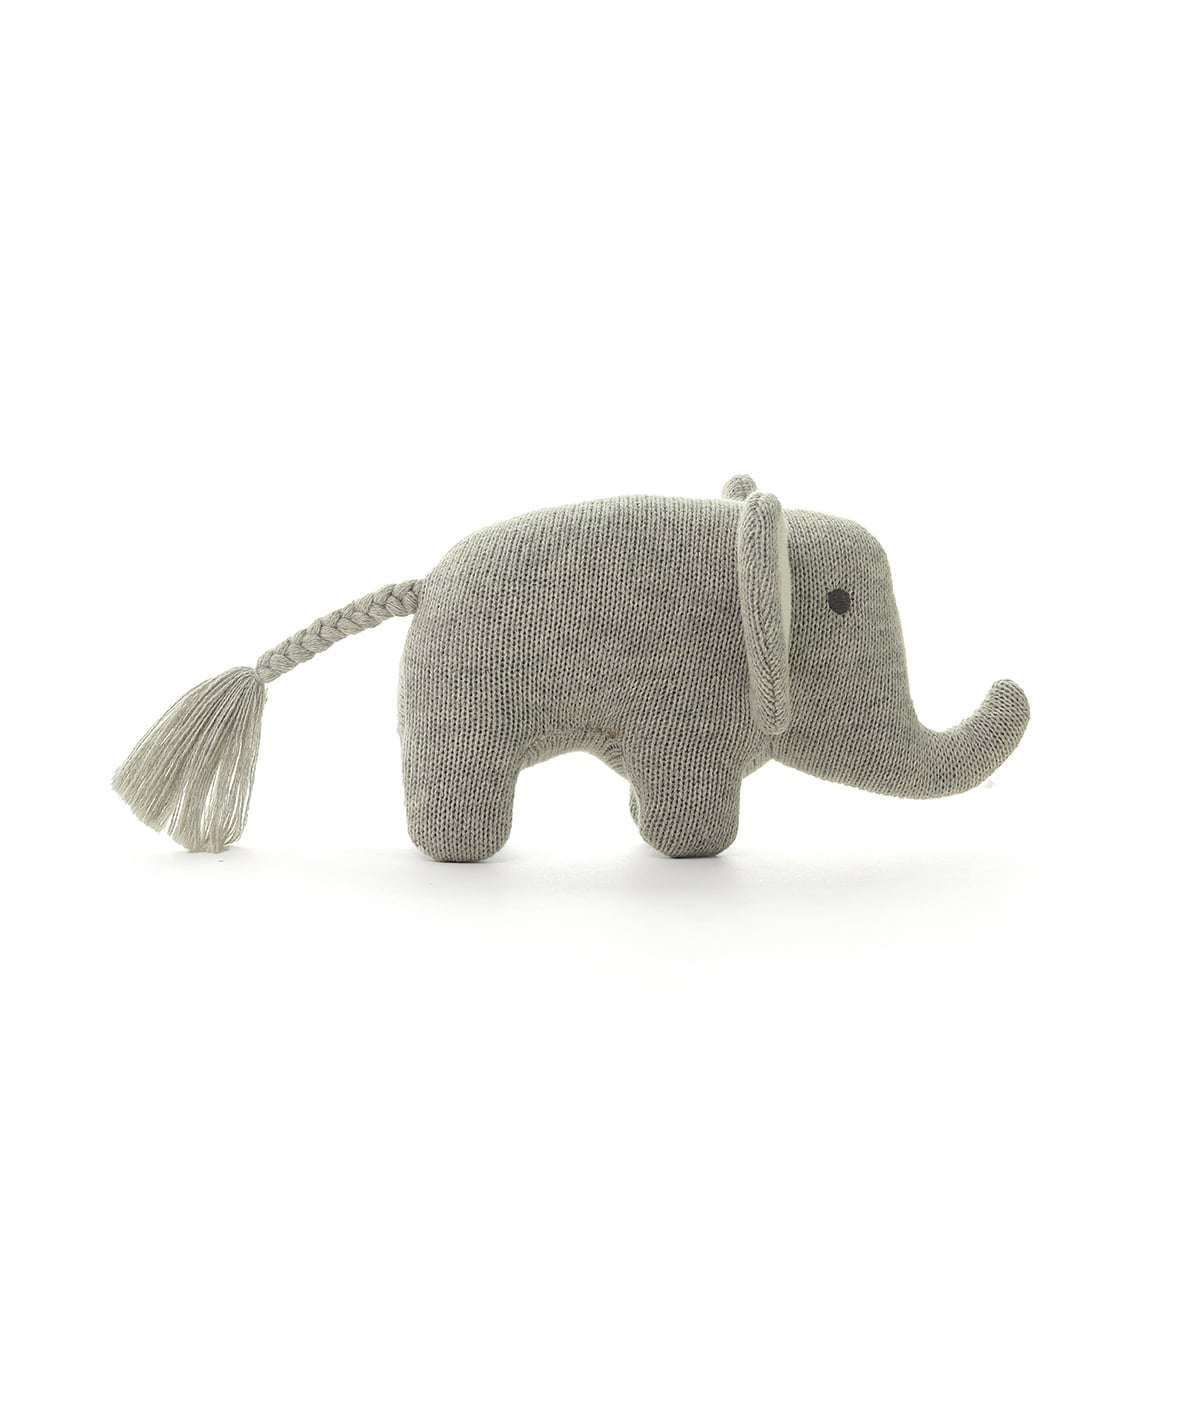 Harris the Elephant- Cotton Knitted Stuffed Soft Rattle Toy (Vanilla Grey Melange)